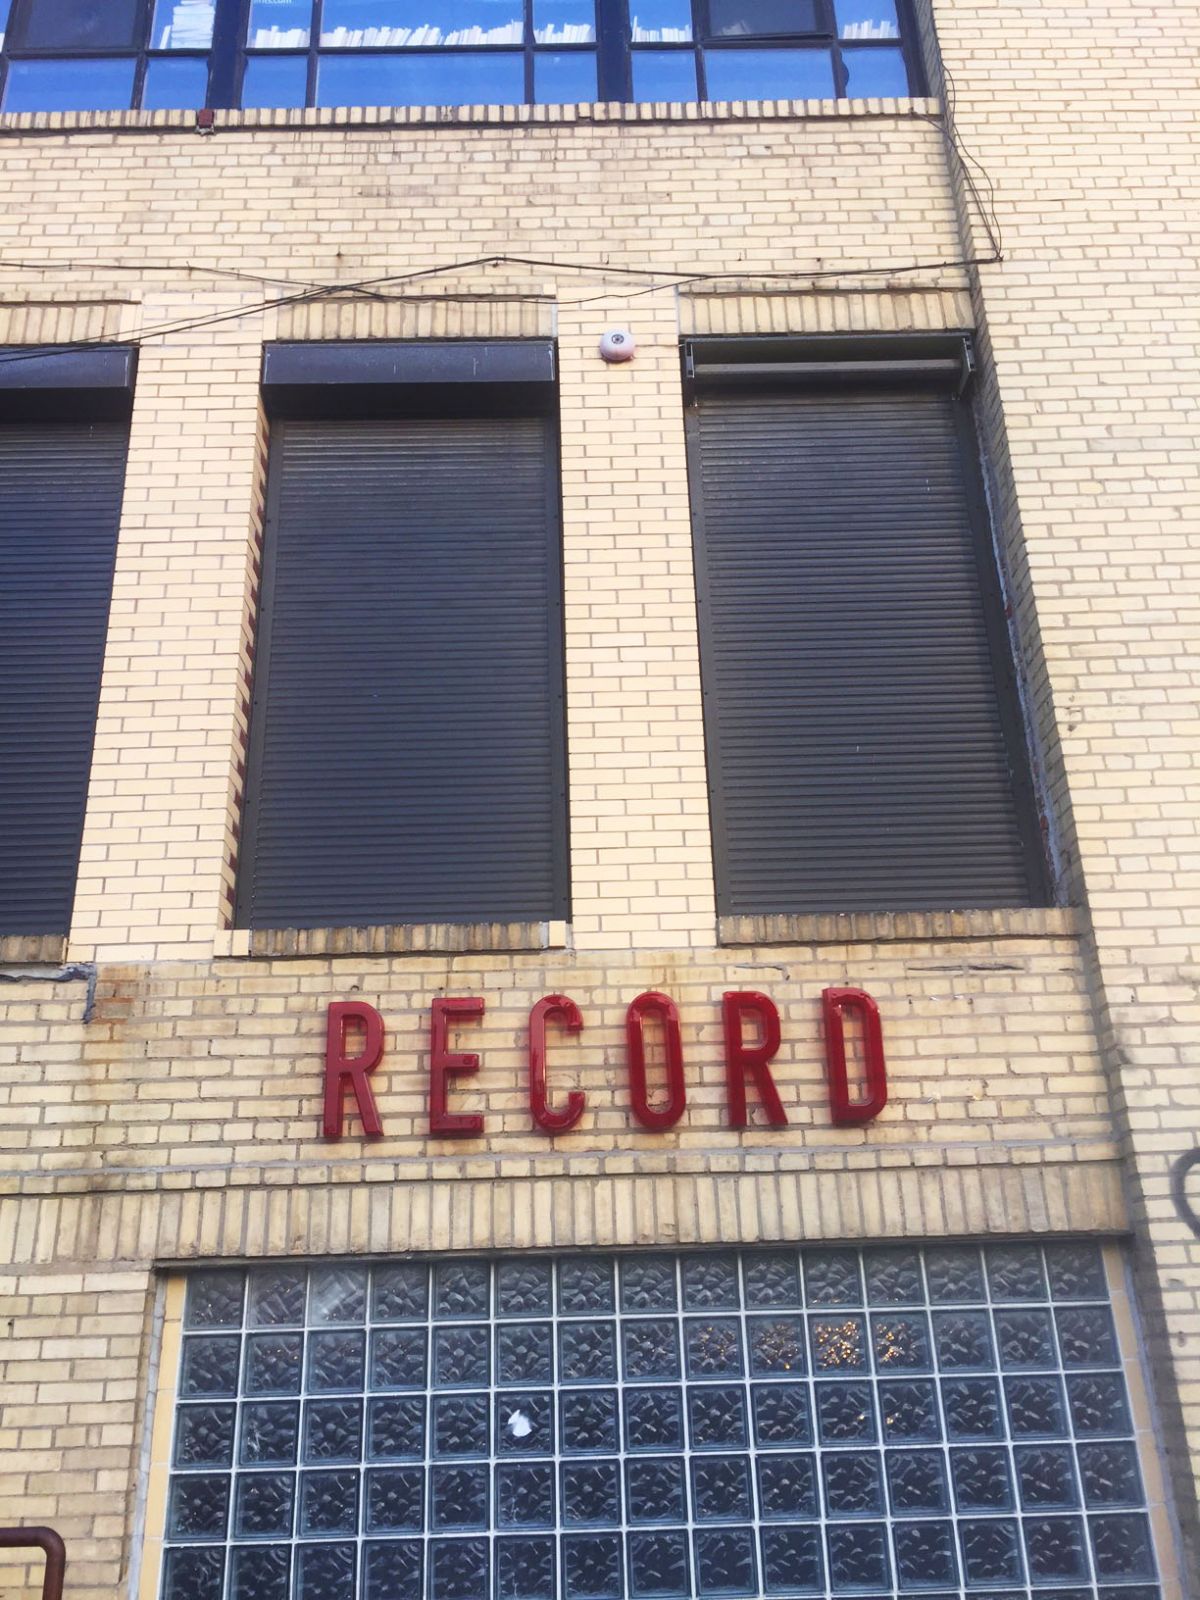 Superior Elevation Records